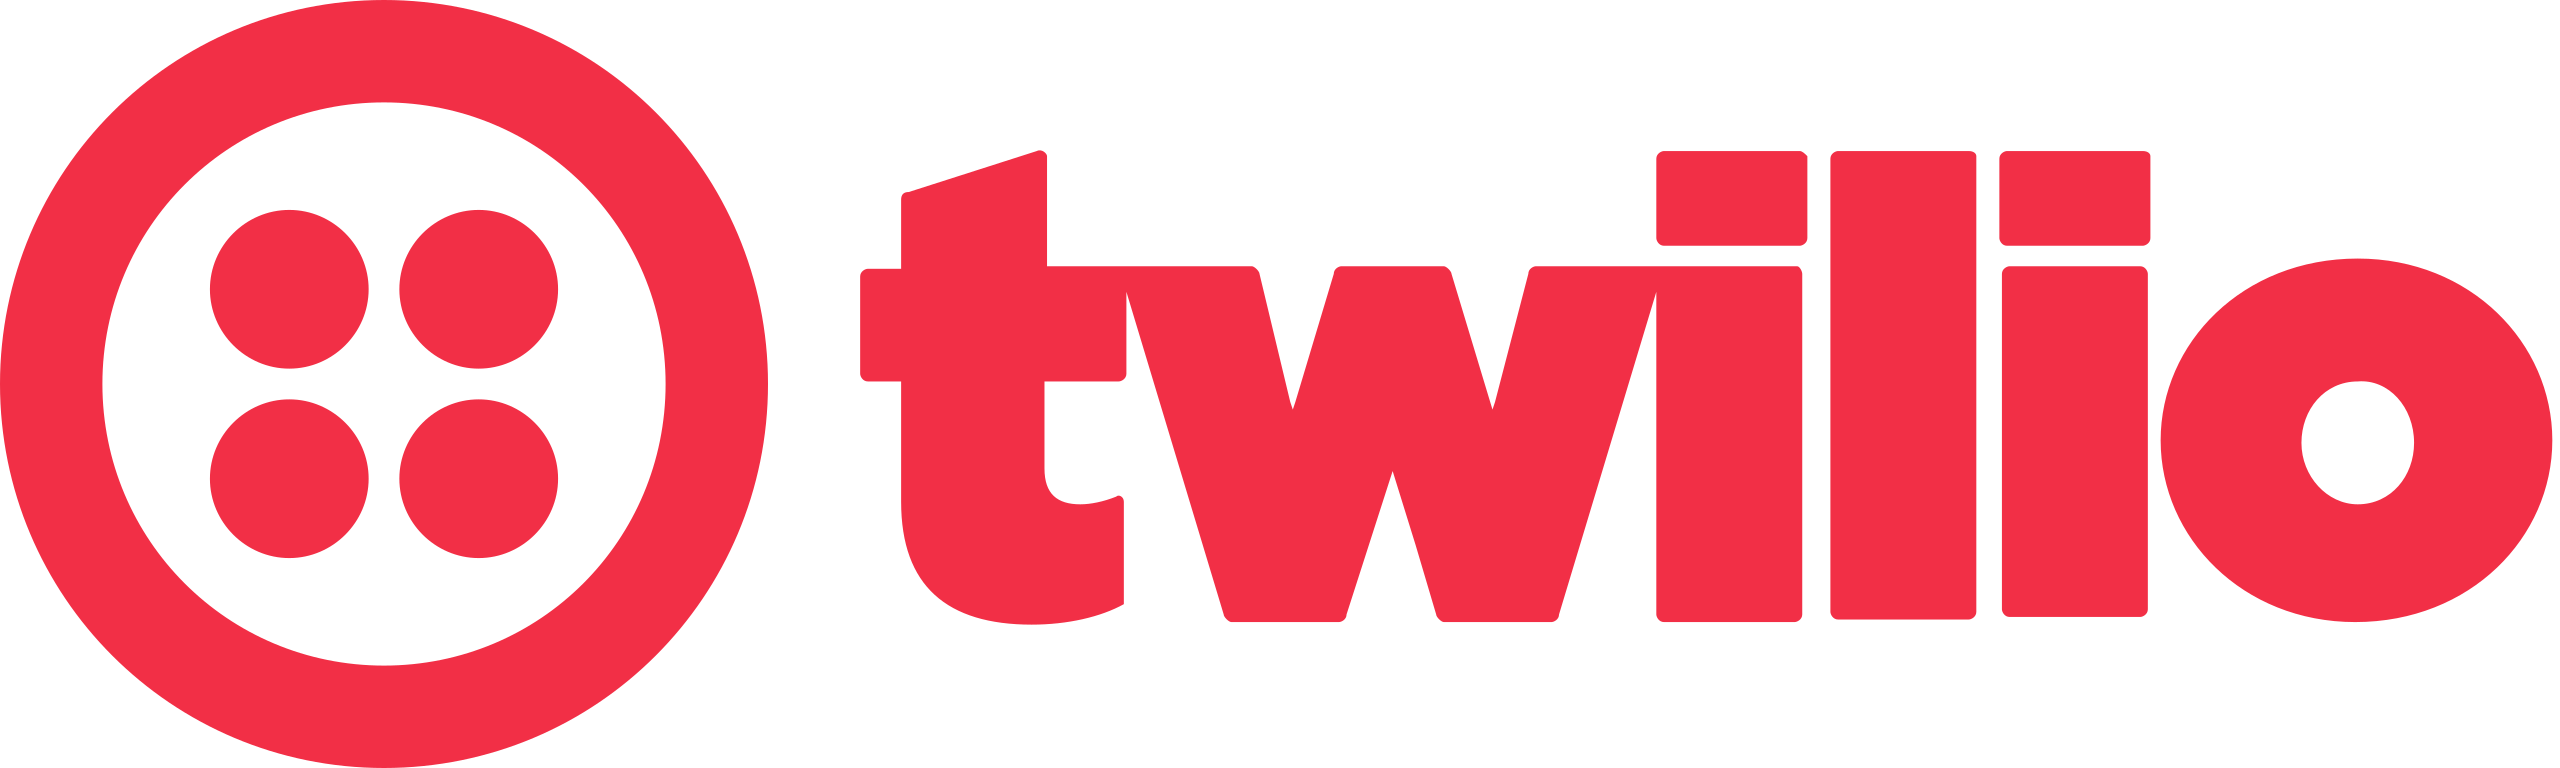 twilio-logo.png